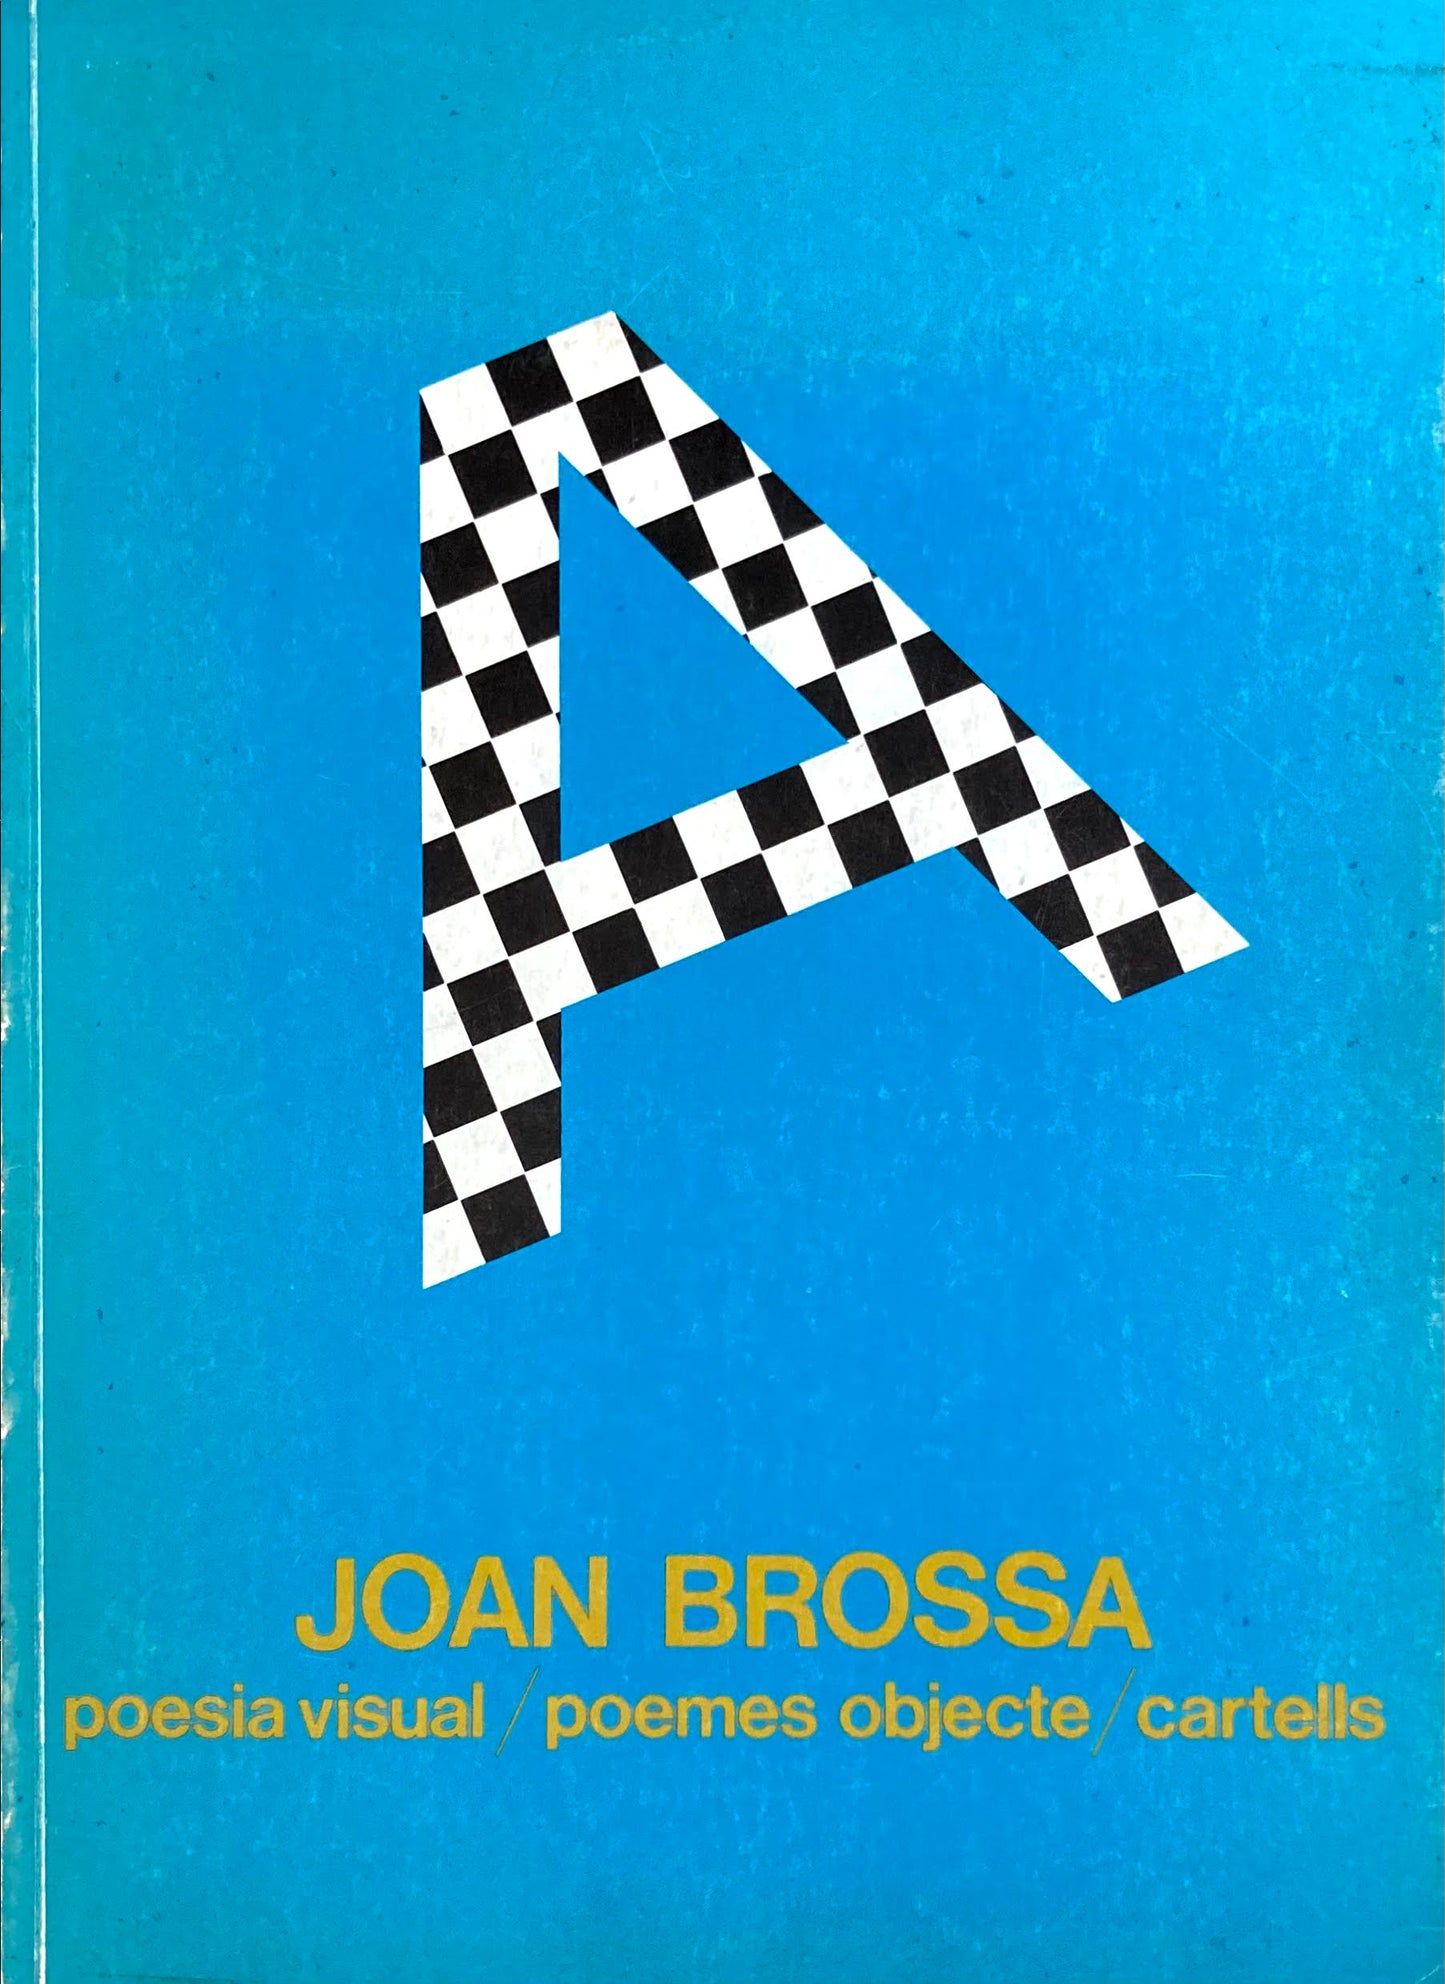 Joan Brossa 　poesia visual/poemes objecte/cartells　ジュアン・ブロッサ　